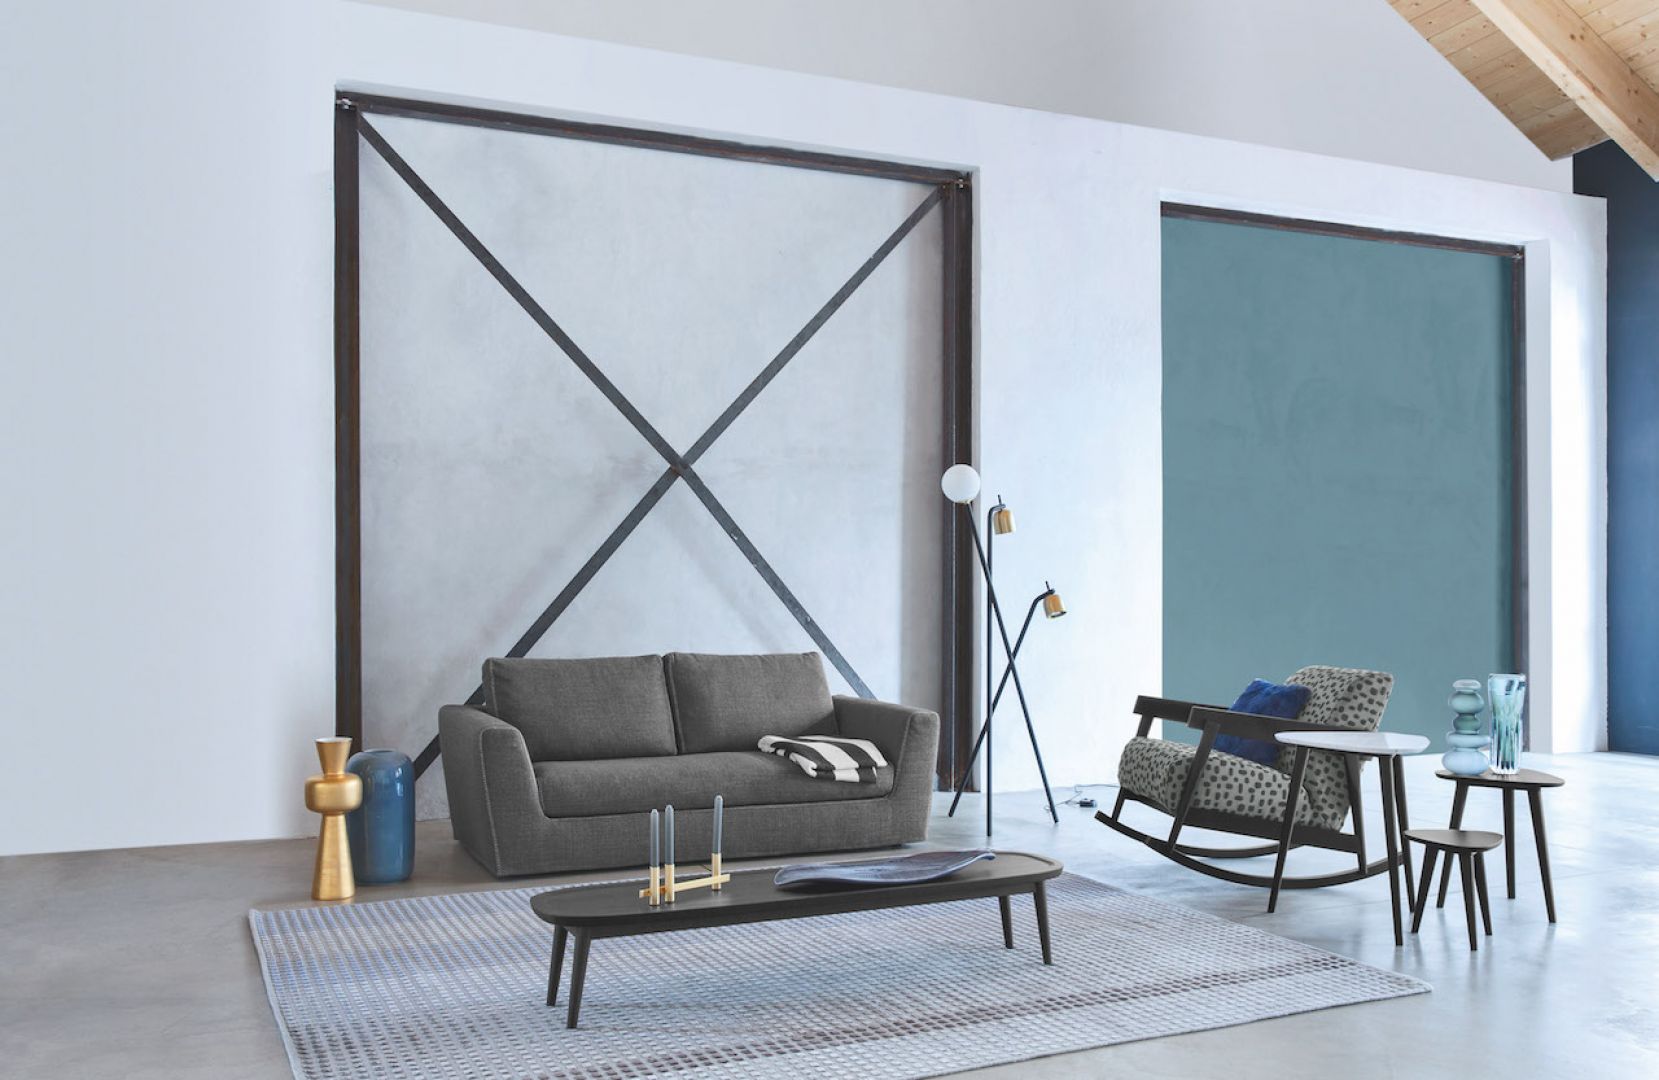 Sofa projektu Paoli Navone dla marki Gervasoni. Fot. Studio Forma 96